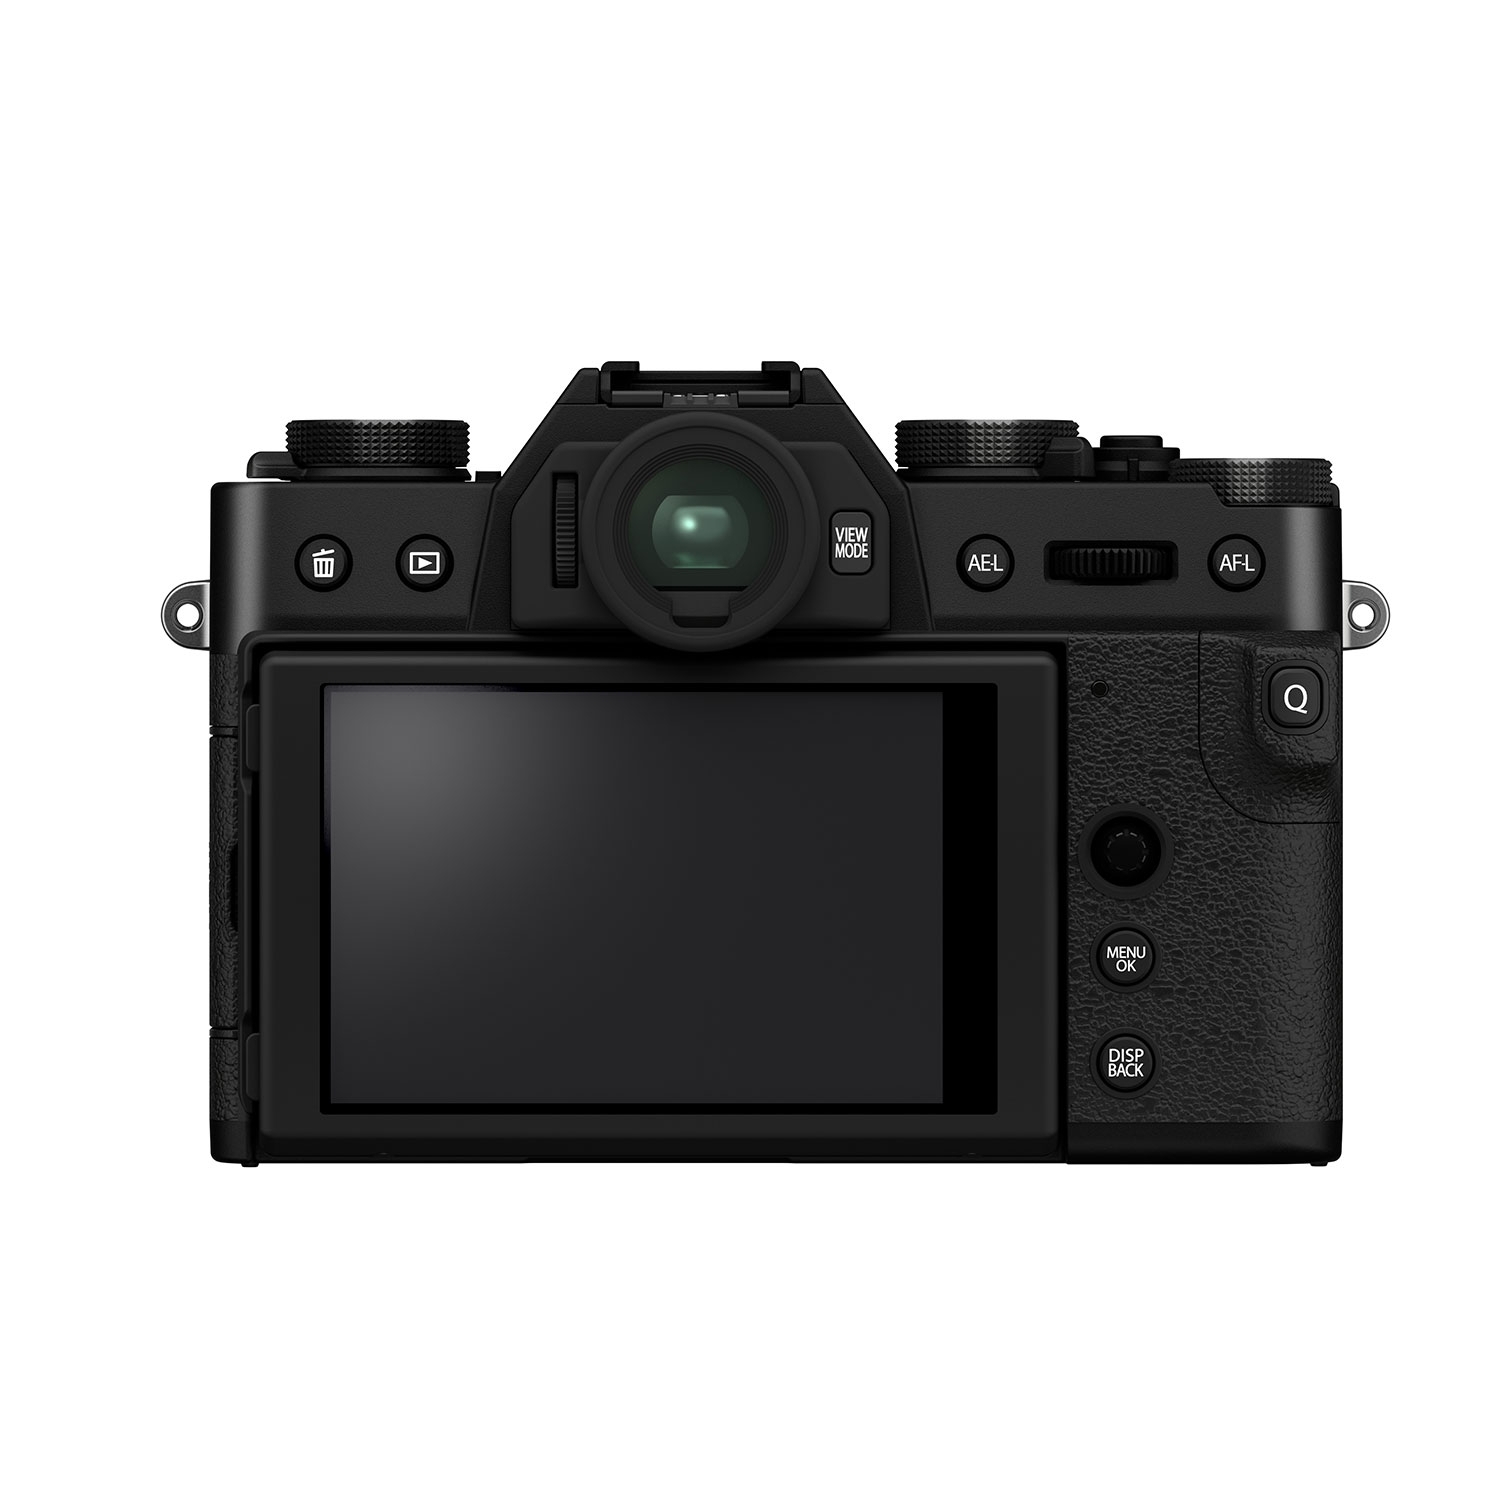 Fujifilm X-T30 II schwarz + Tamron 18-300mm 1:3.5-6.3 Di III-A VC VXD